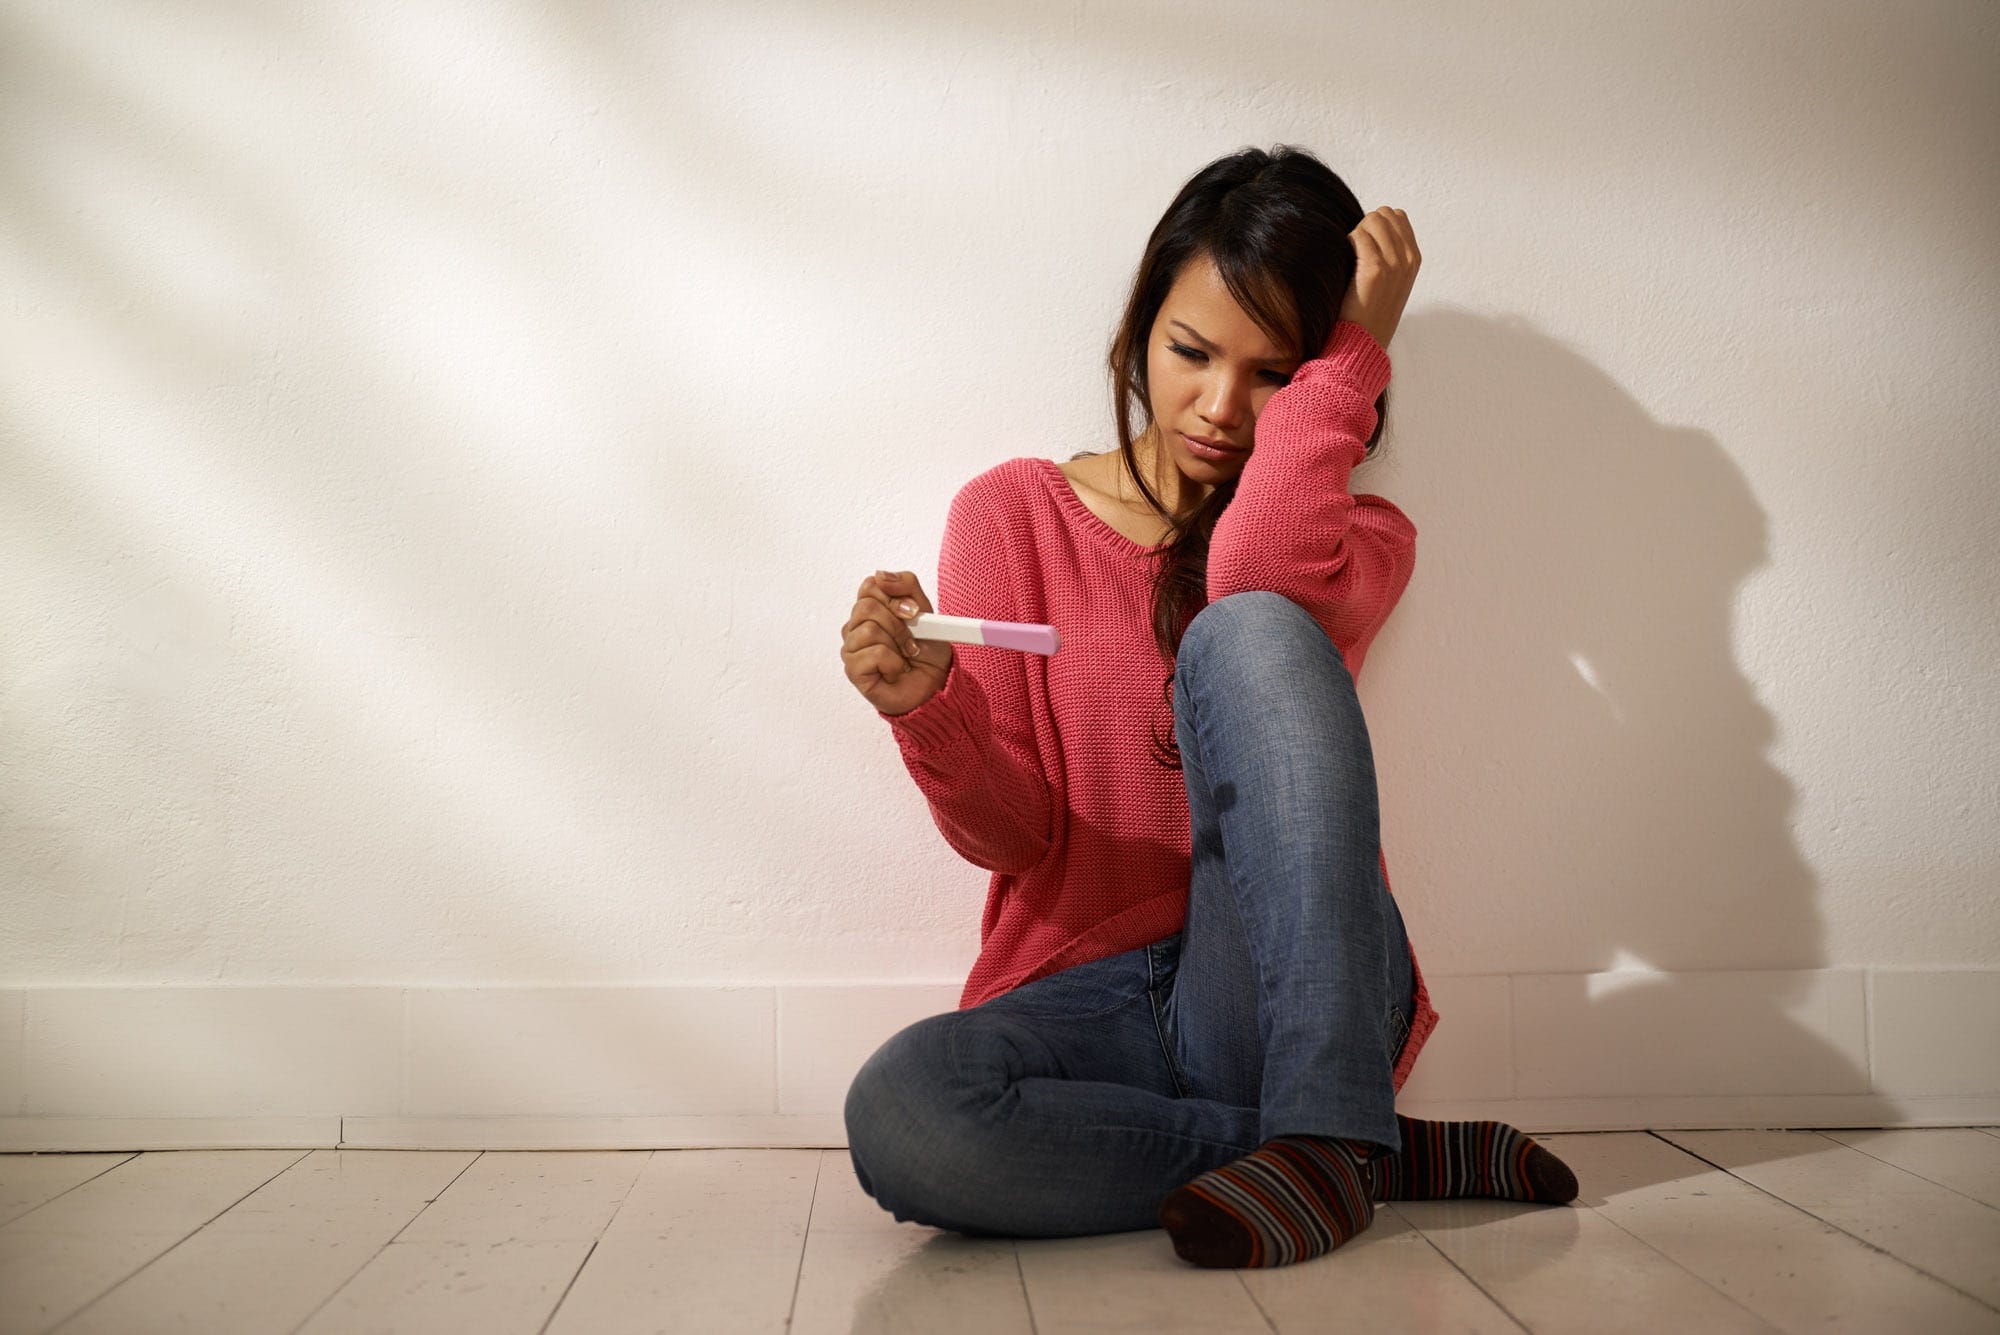 teenager-sad-scared-reading-pregnancy-test | American Pregnancy Association